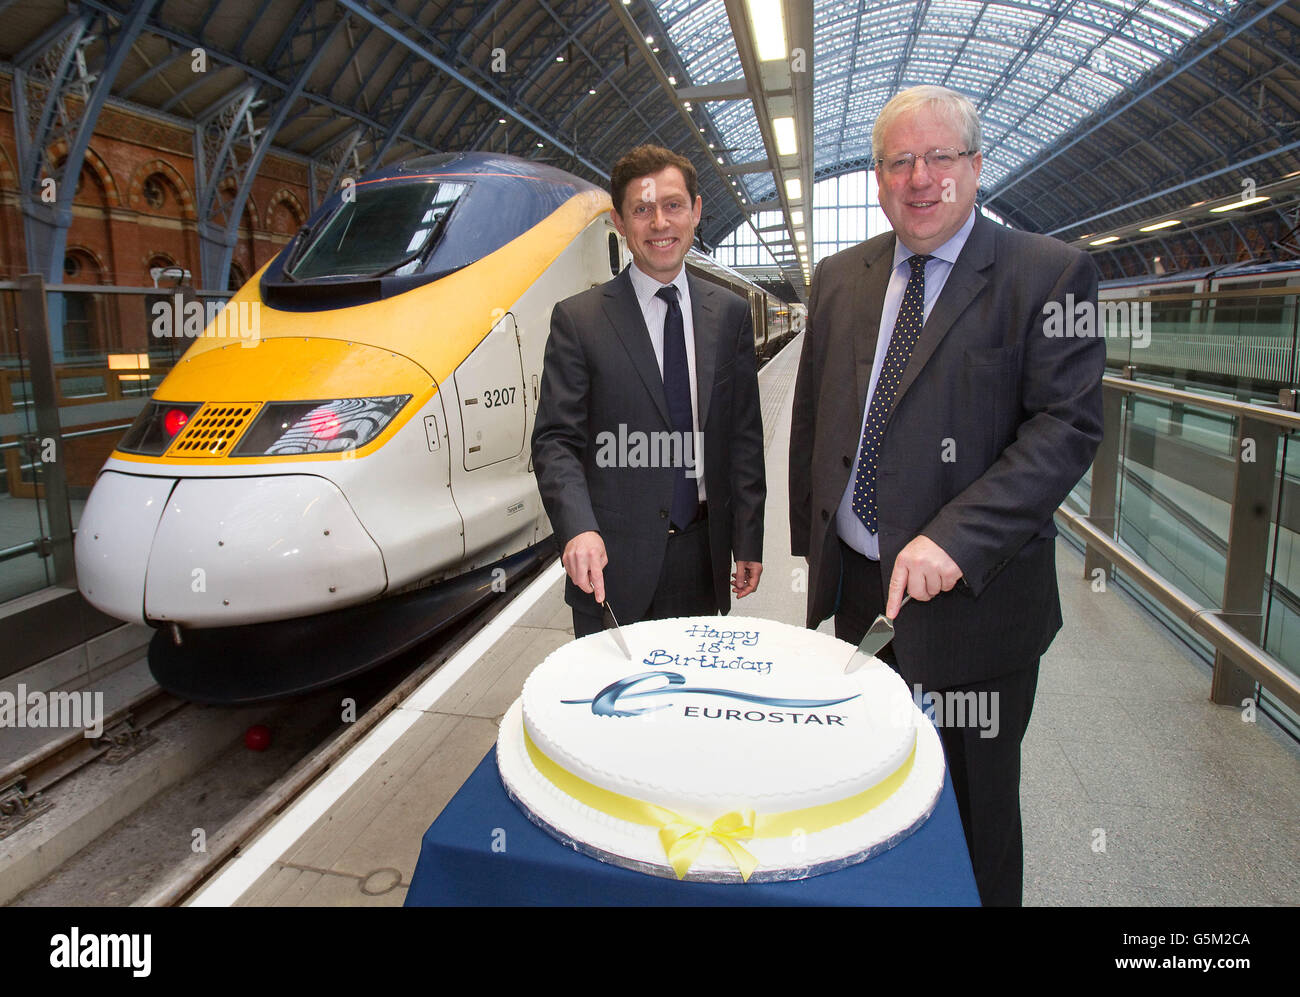 Eurostar CEO Nicolas Petrovic (left) and Transport Secretary Patrick McLoughlin at St Pancras train station in London for Eurostar's 18th birthday celebrations. Stock Photo